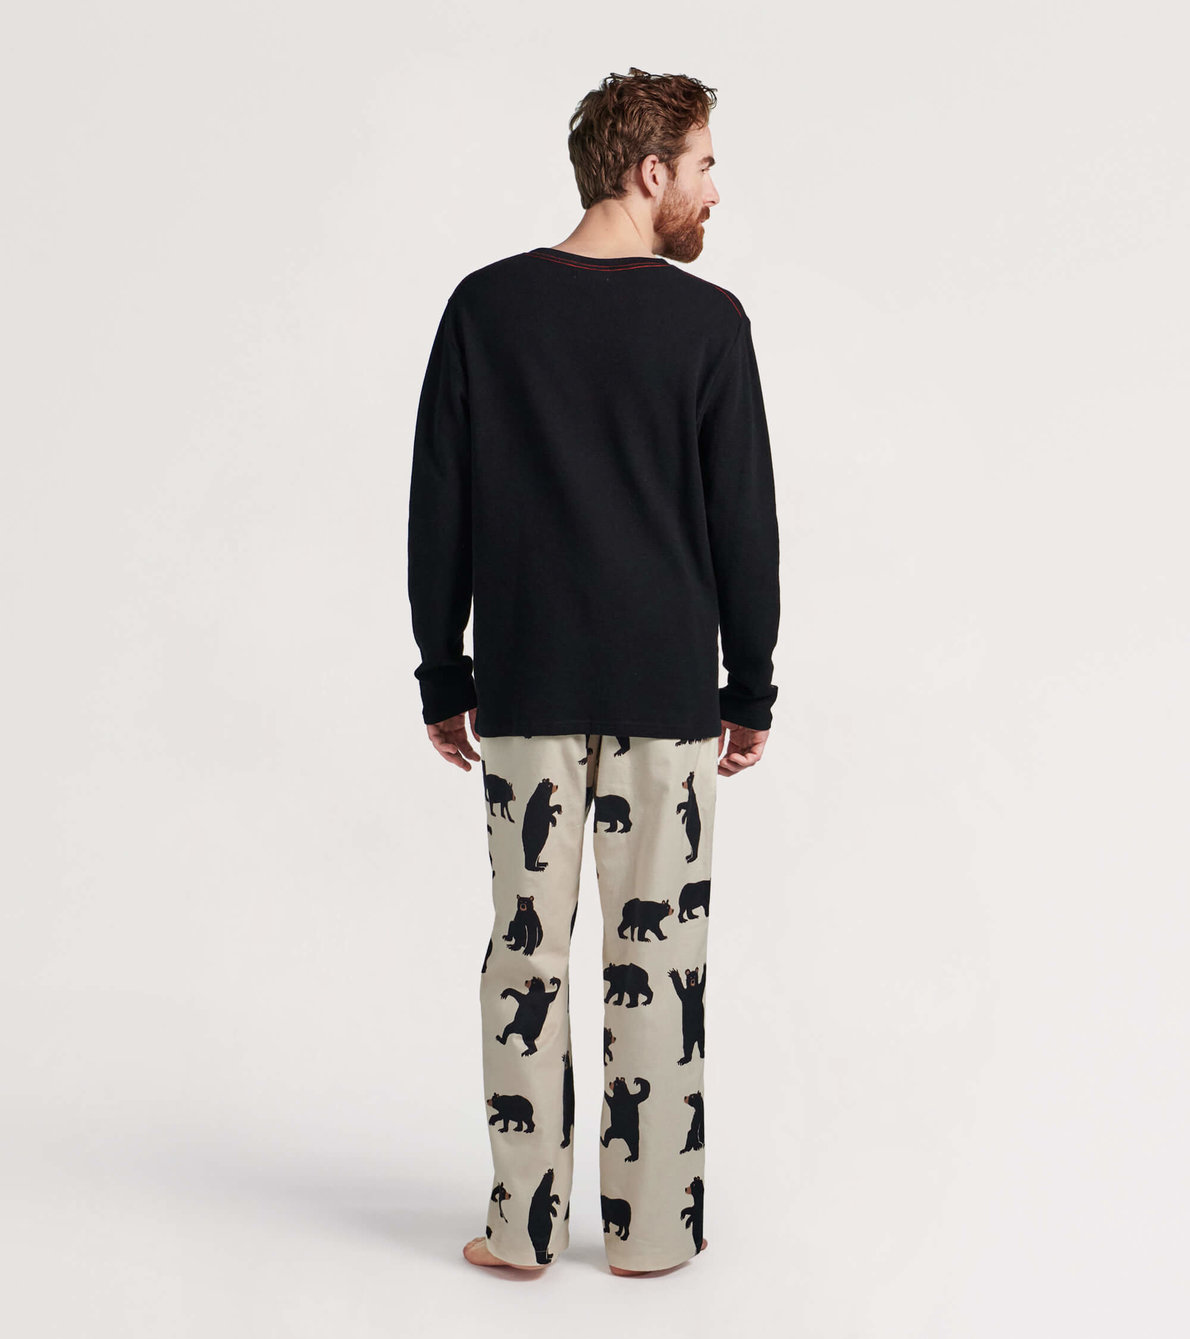 View larger image of Men's Black Bears Flannel Pajama Pants